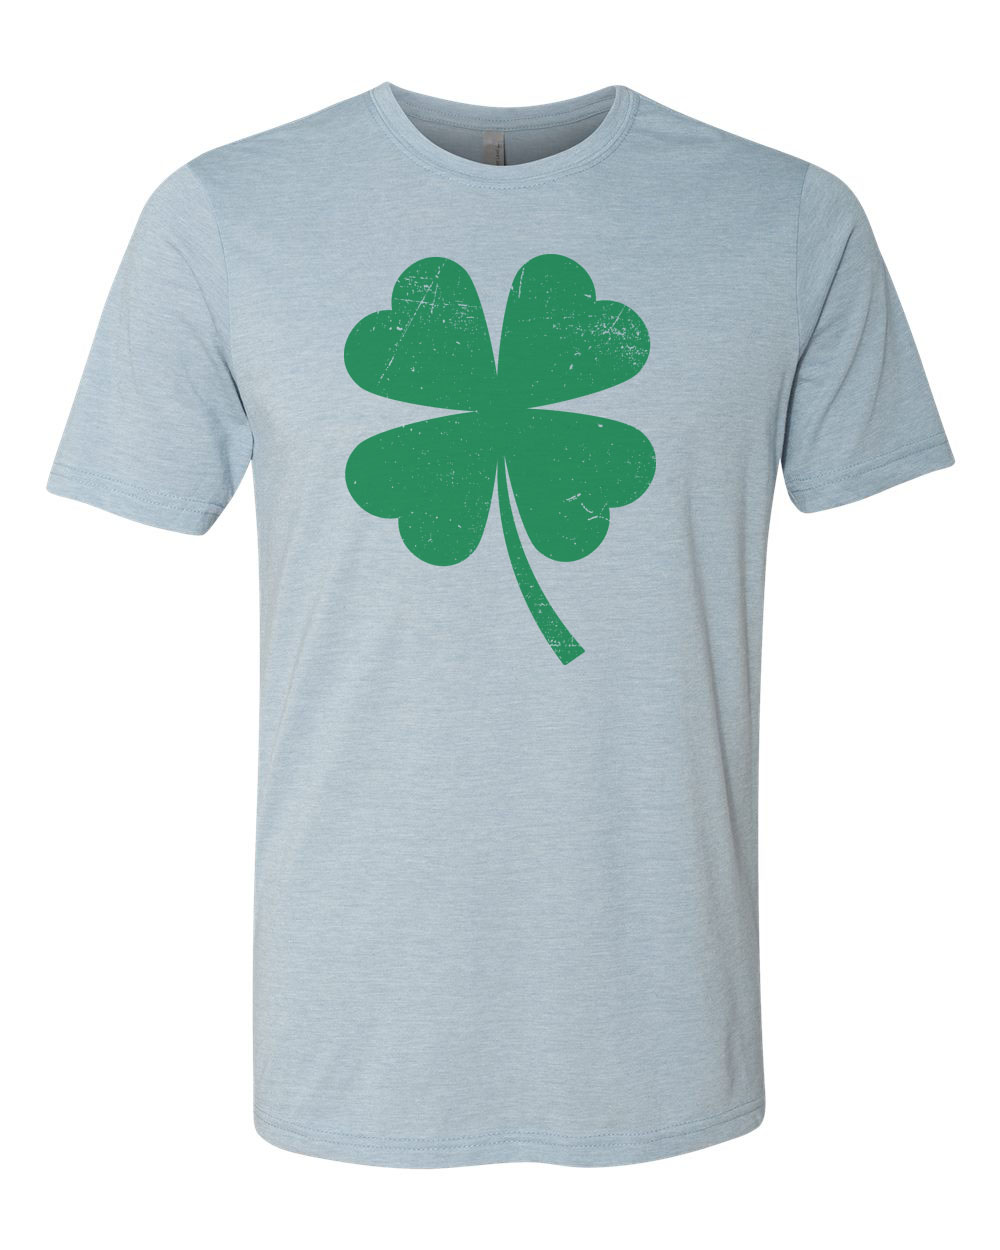 St. Patricks Day Shirt, Shamrock Shirt, Four Leaf Clover, Unisex Fit, Distressed Clover, Clover Shirt, 4 Leaf Clover, Shamrock, St Patricks, Stonewash Denim, SMALL - image 1 of 1